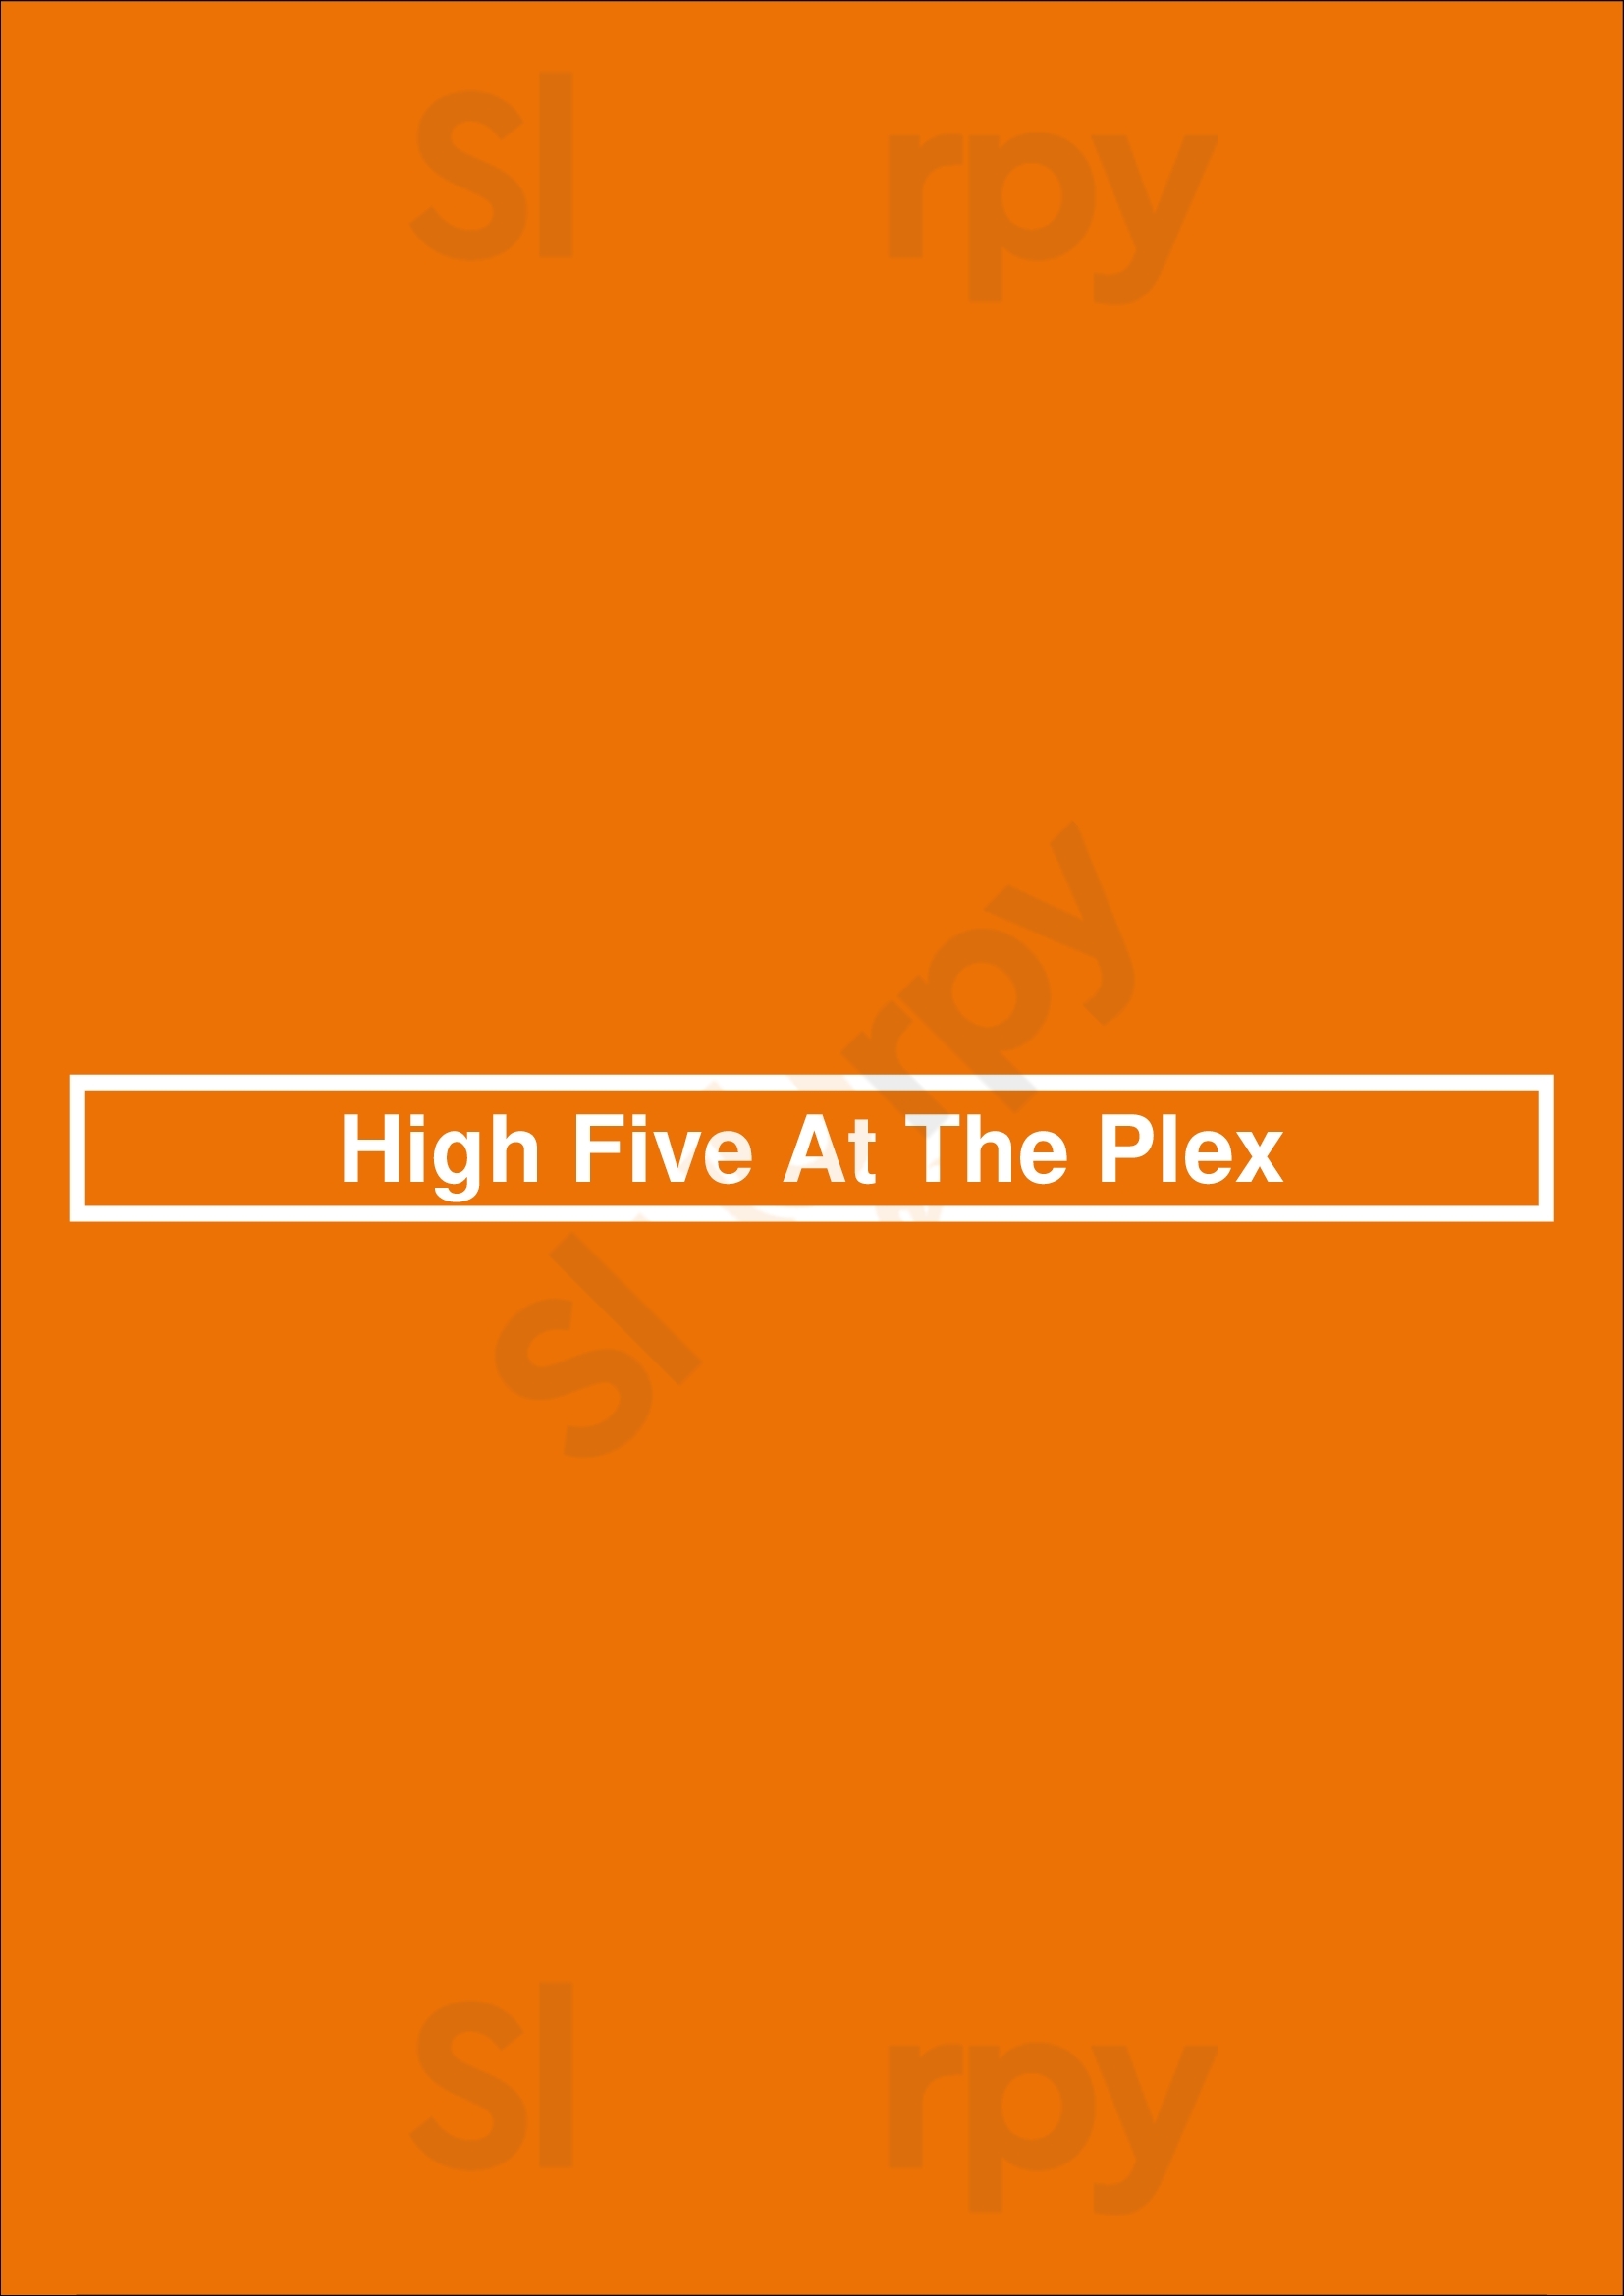 High Five At The Plex San Jose Menu - 1